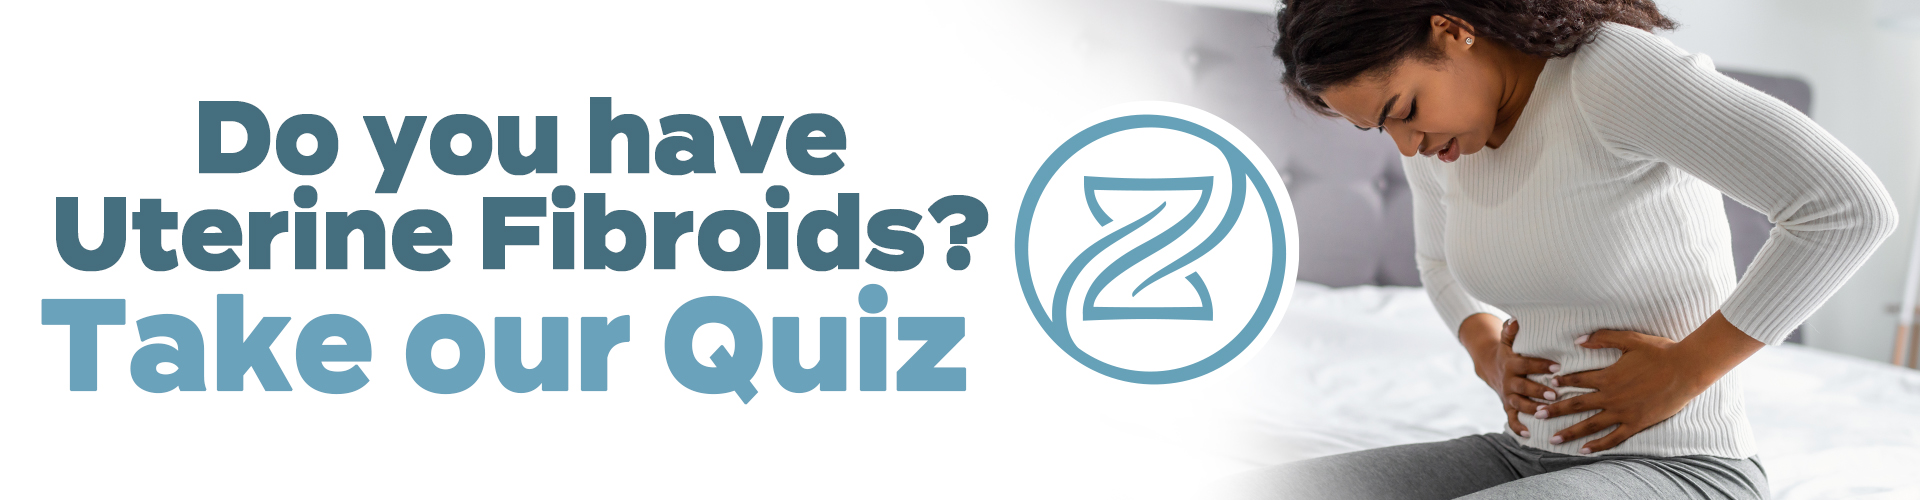 Do you have uterine fibroids? Take our quiz